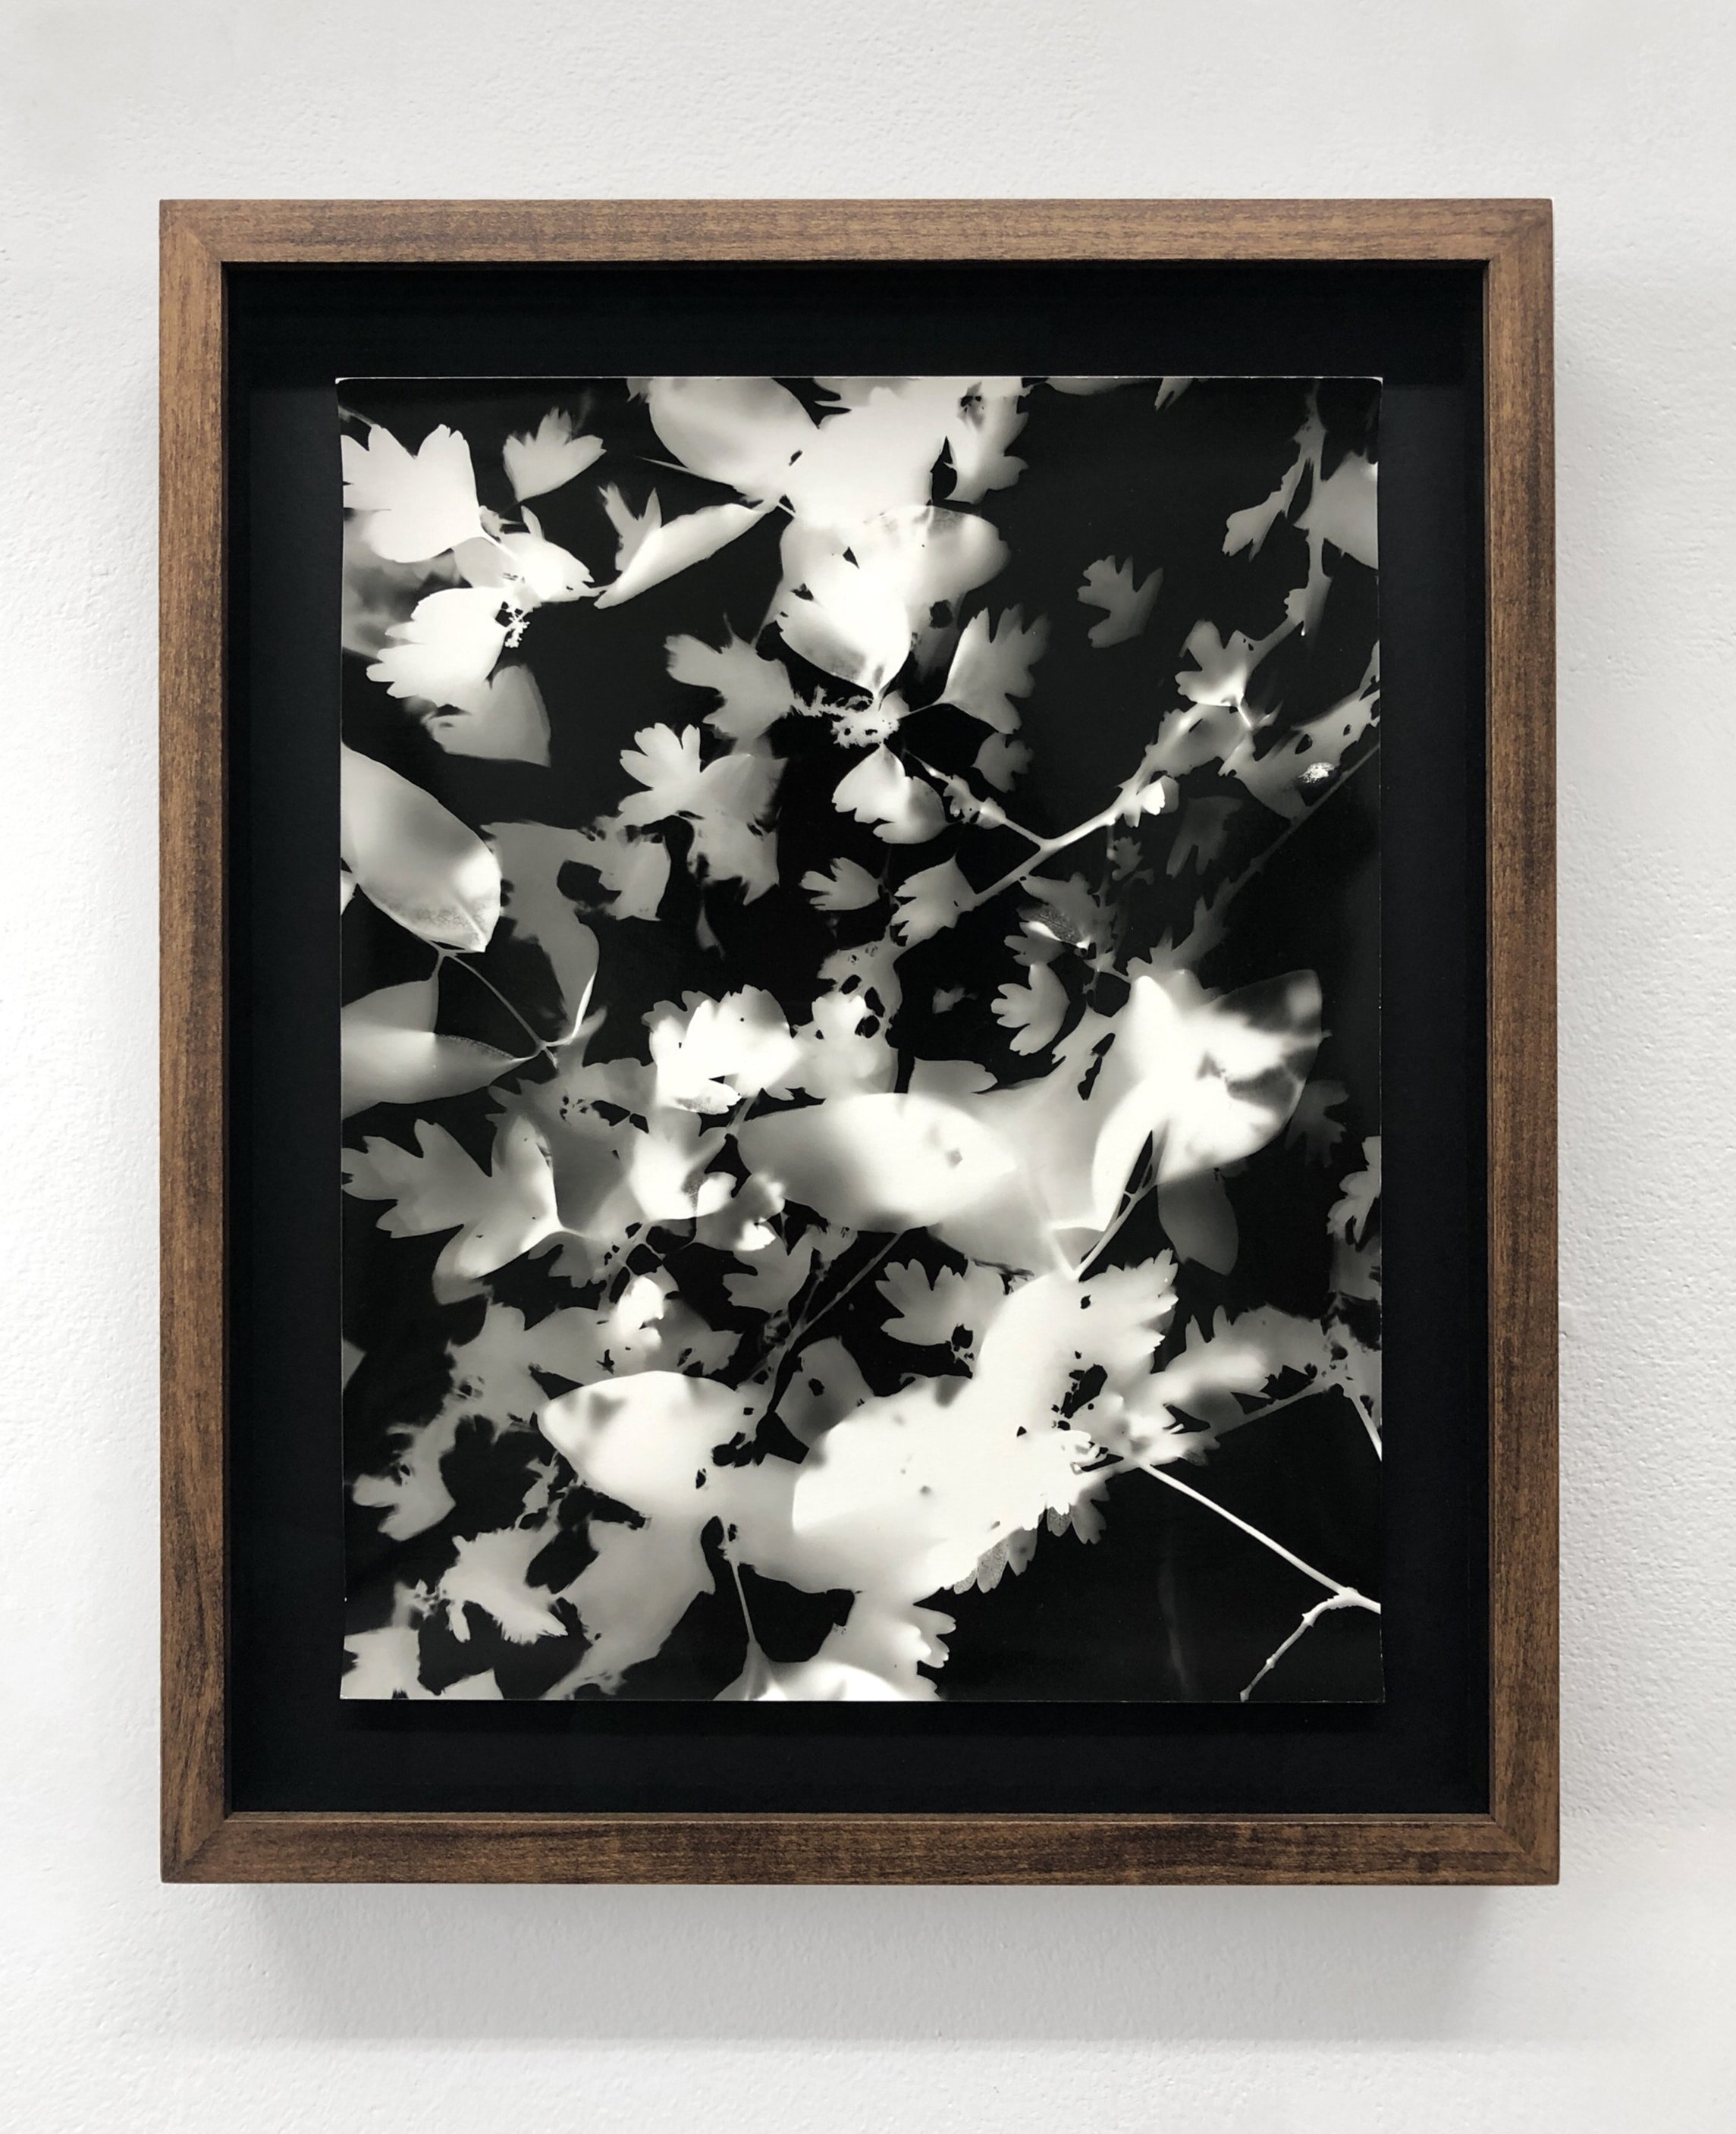   Sylvan Crop XI , 2018, photogram on fibre-based paper, 37.5x31cm 